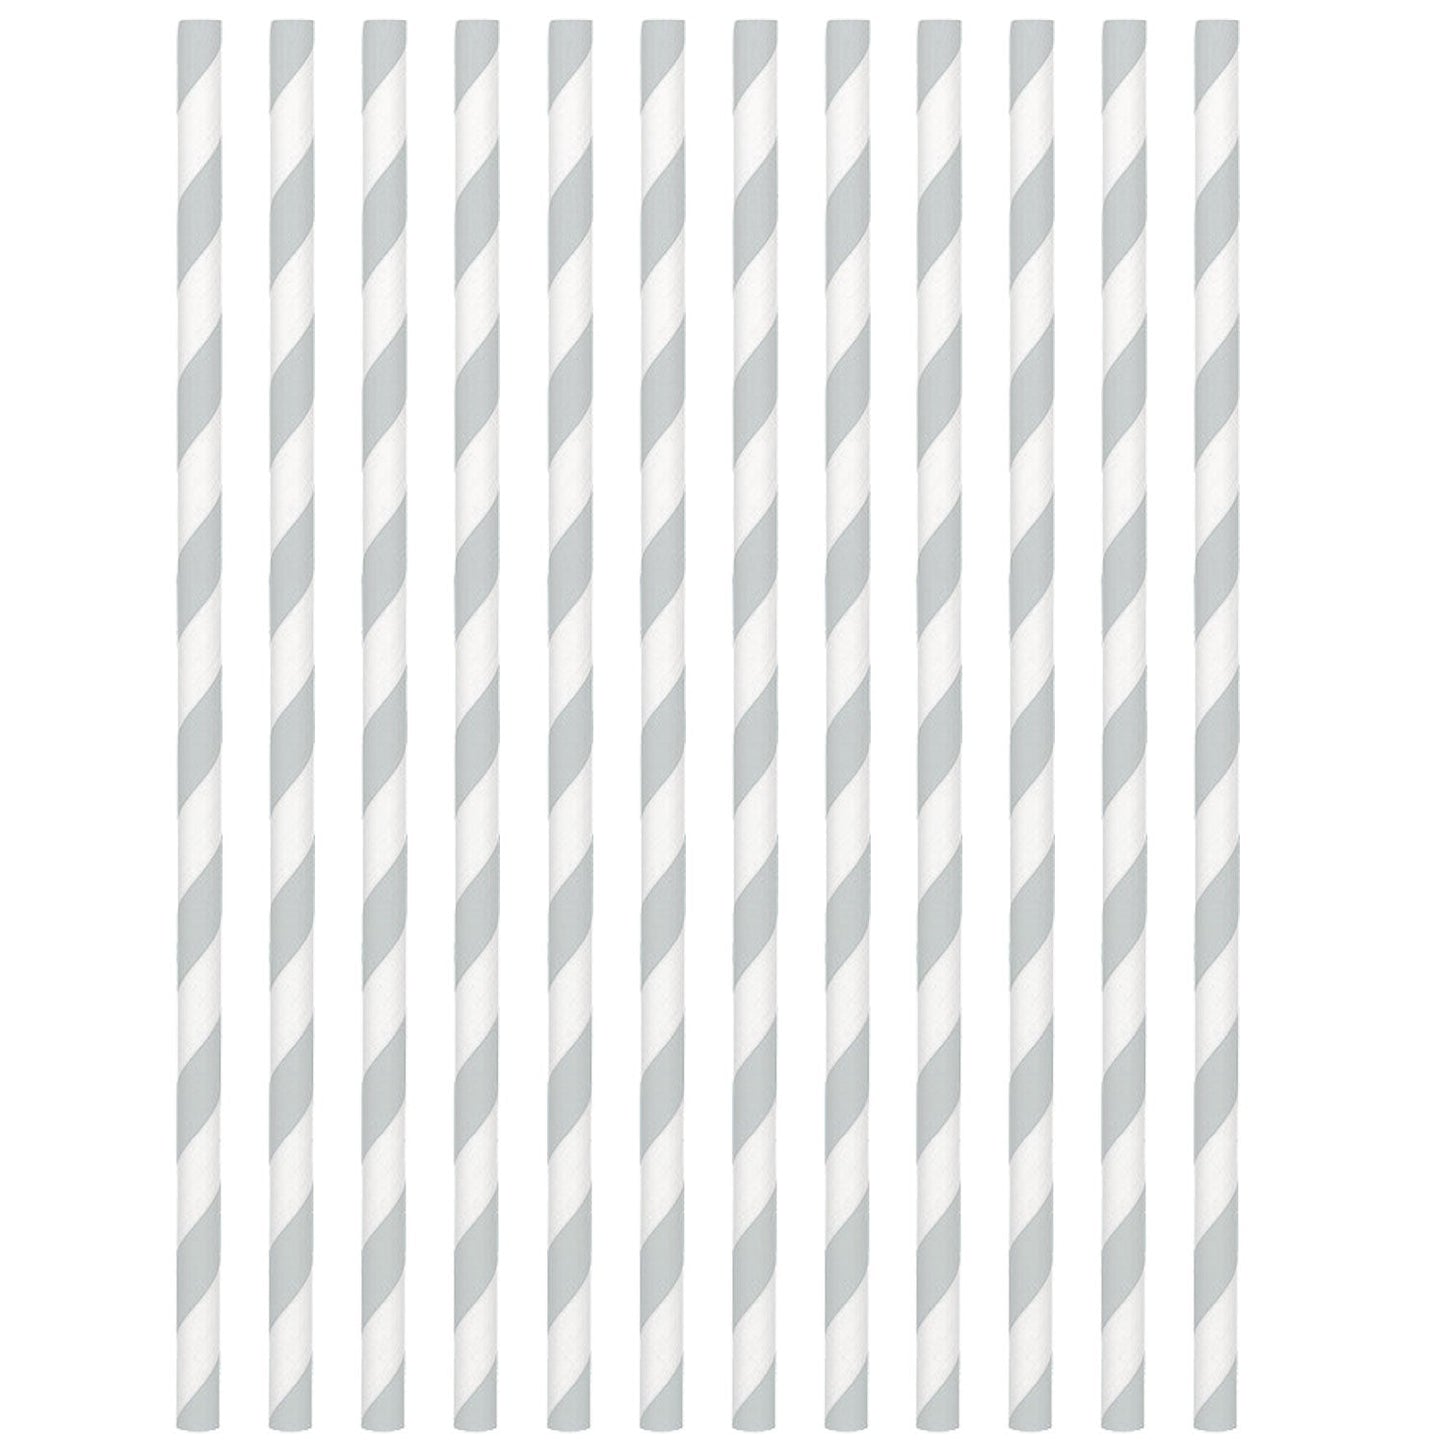 Silver Paper Straws, 19cm